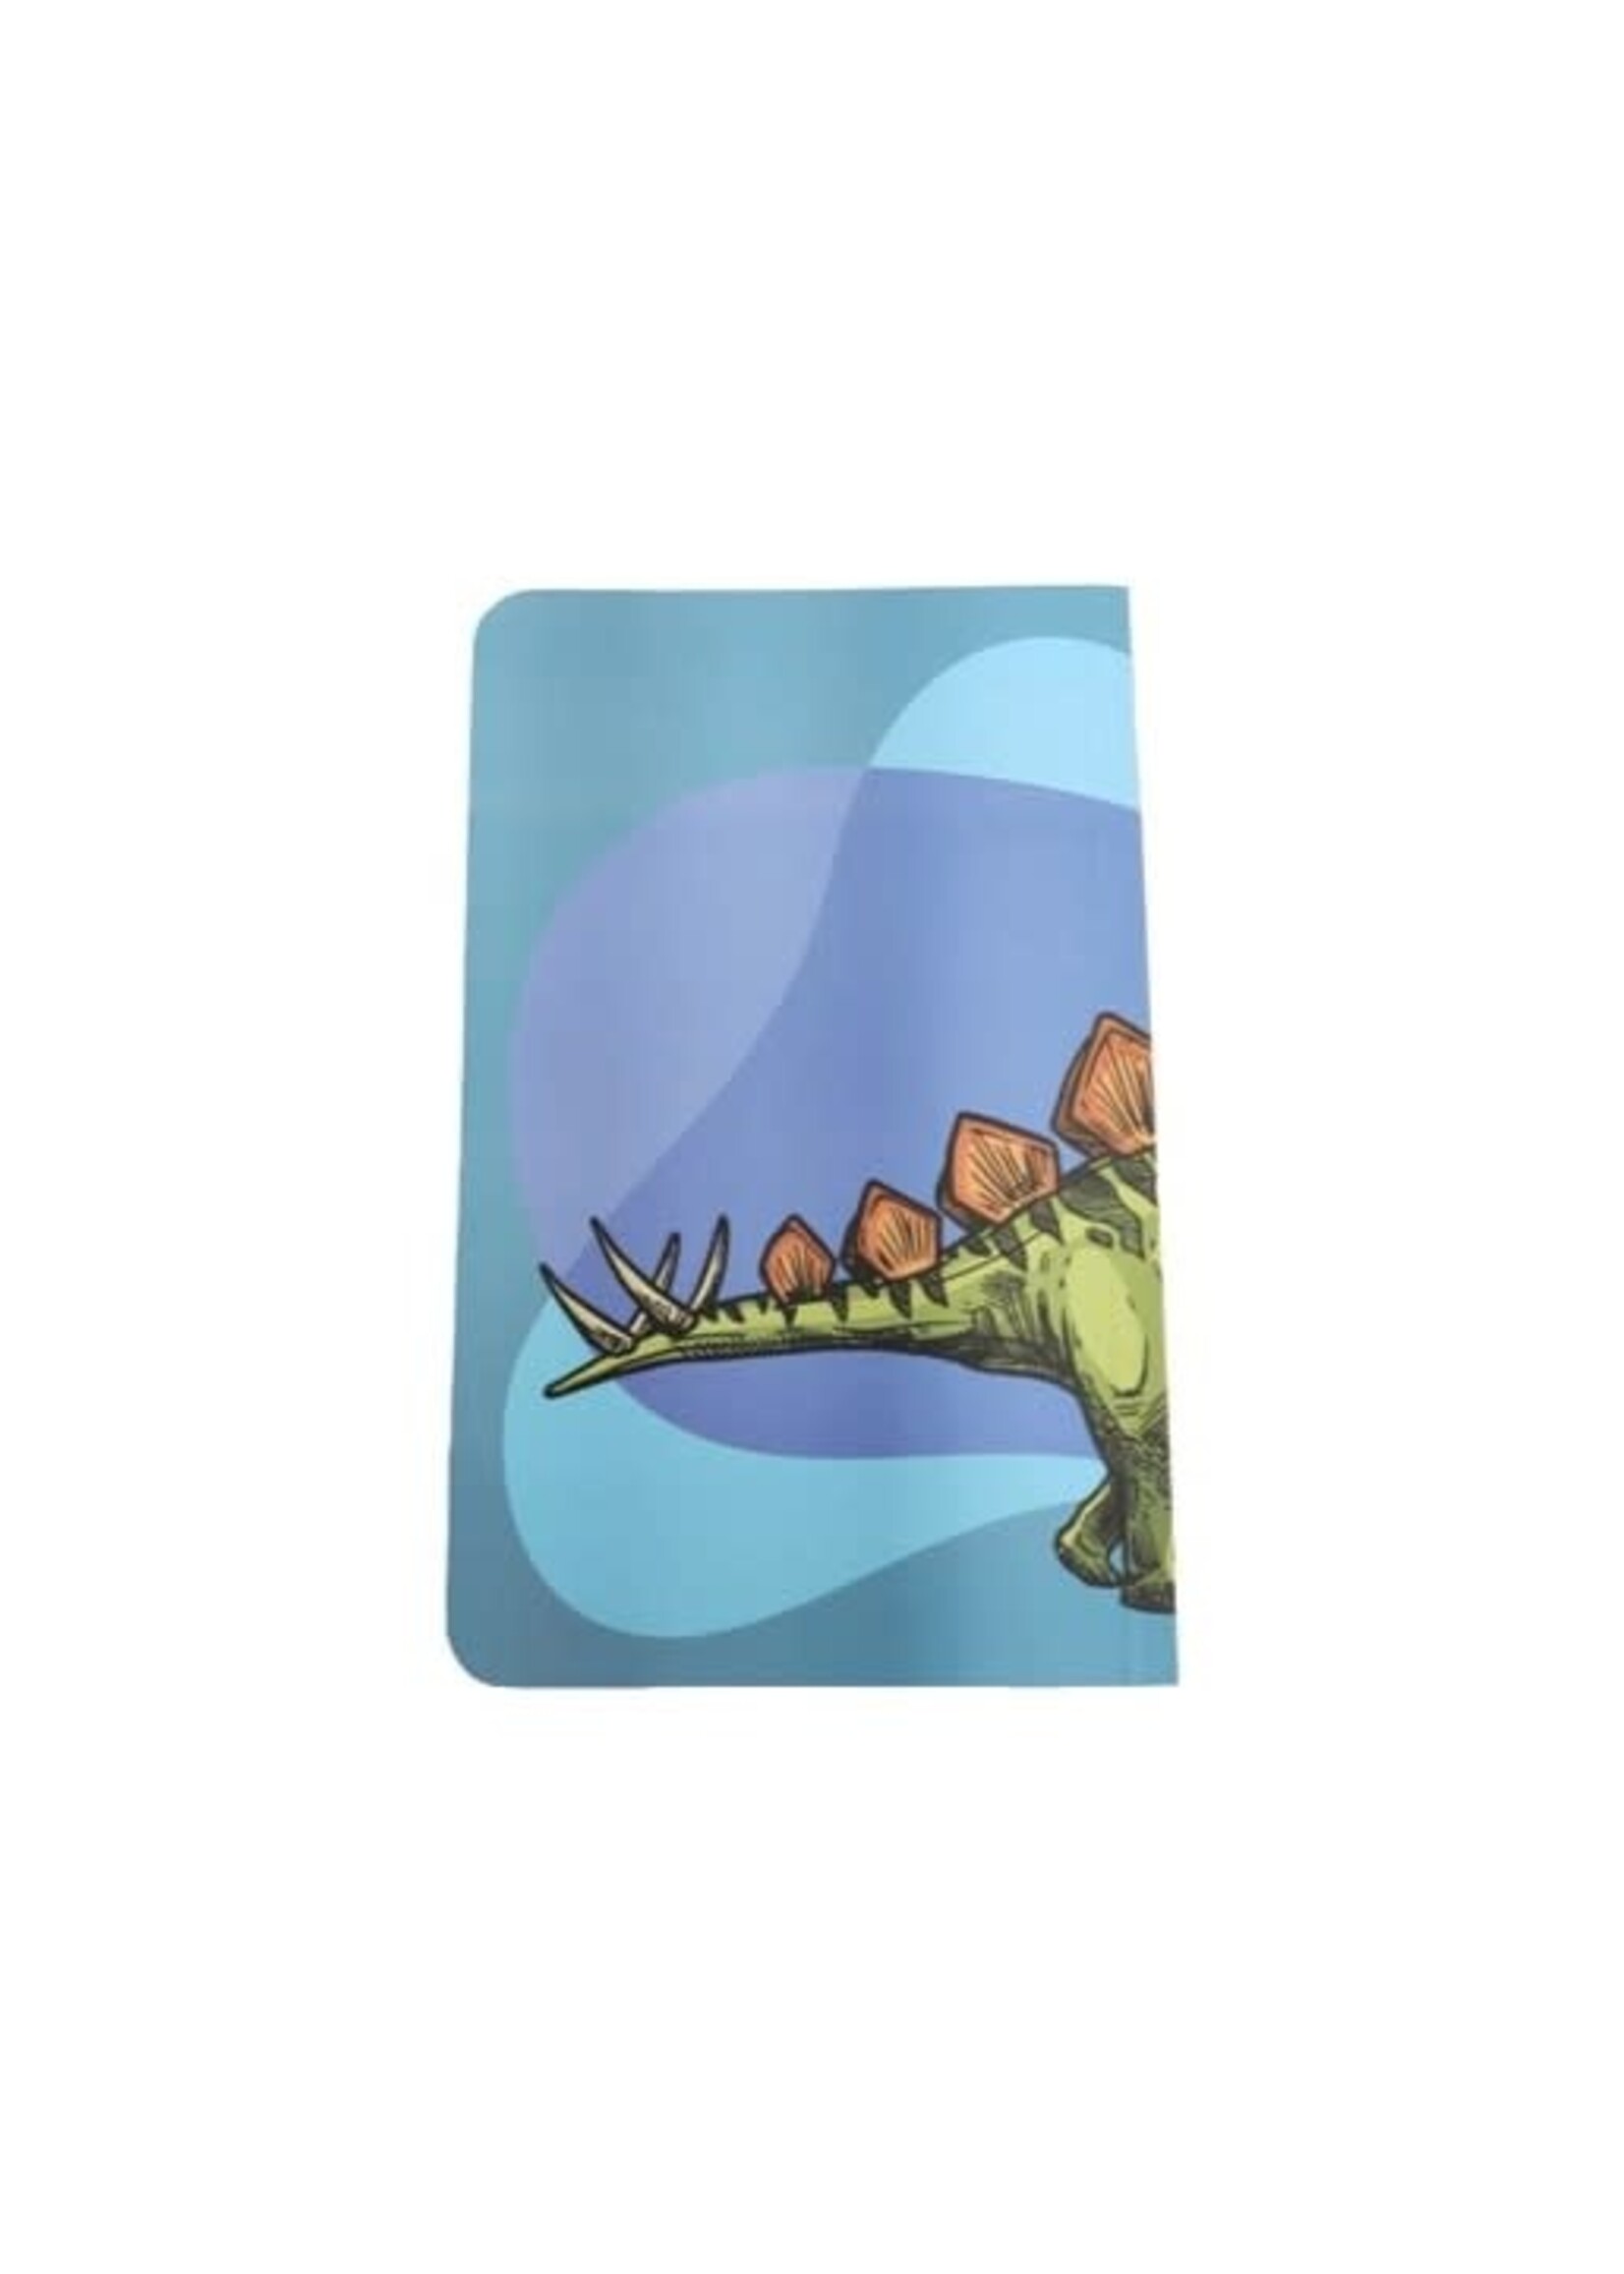 Stegosaurus Medium Journal